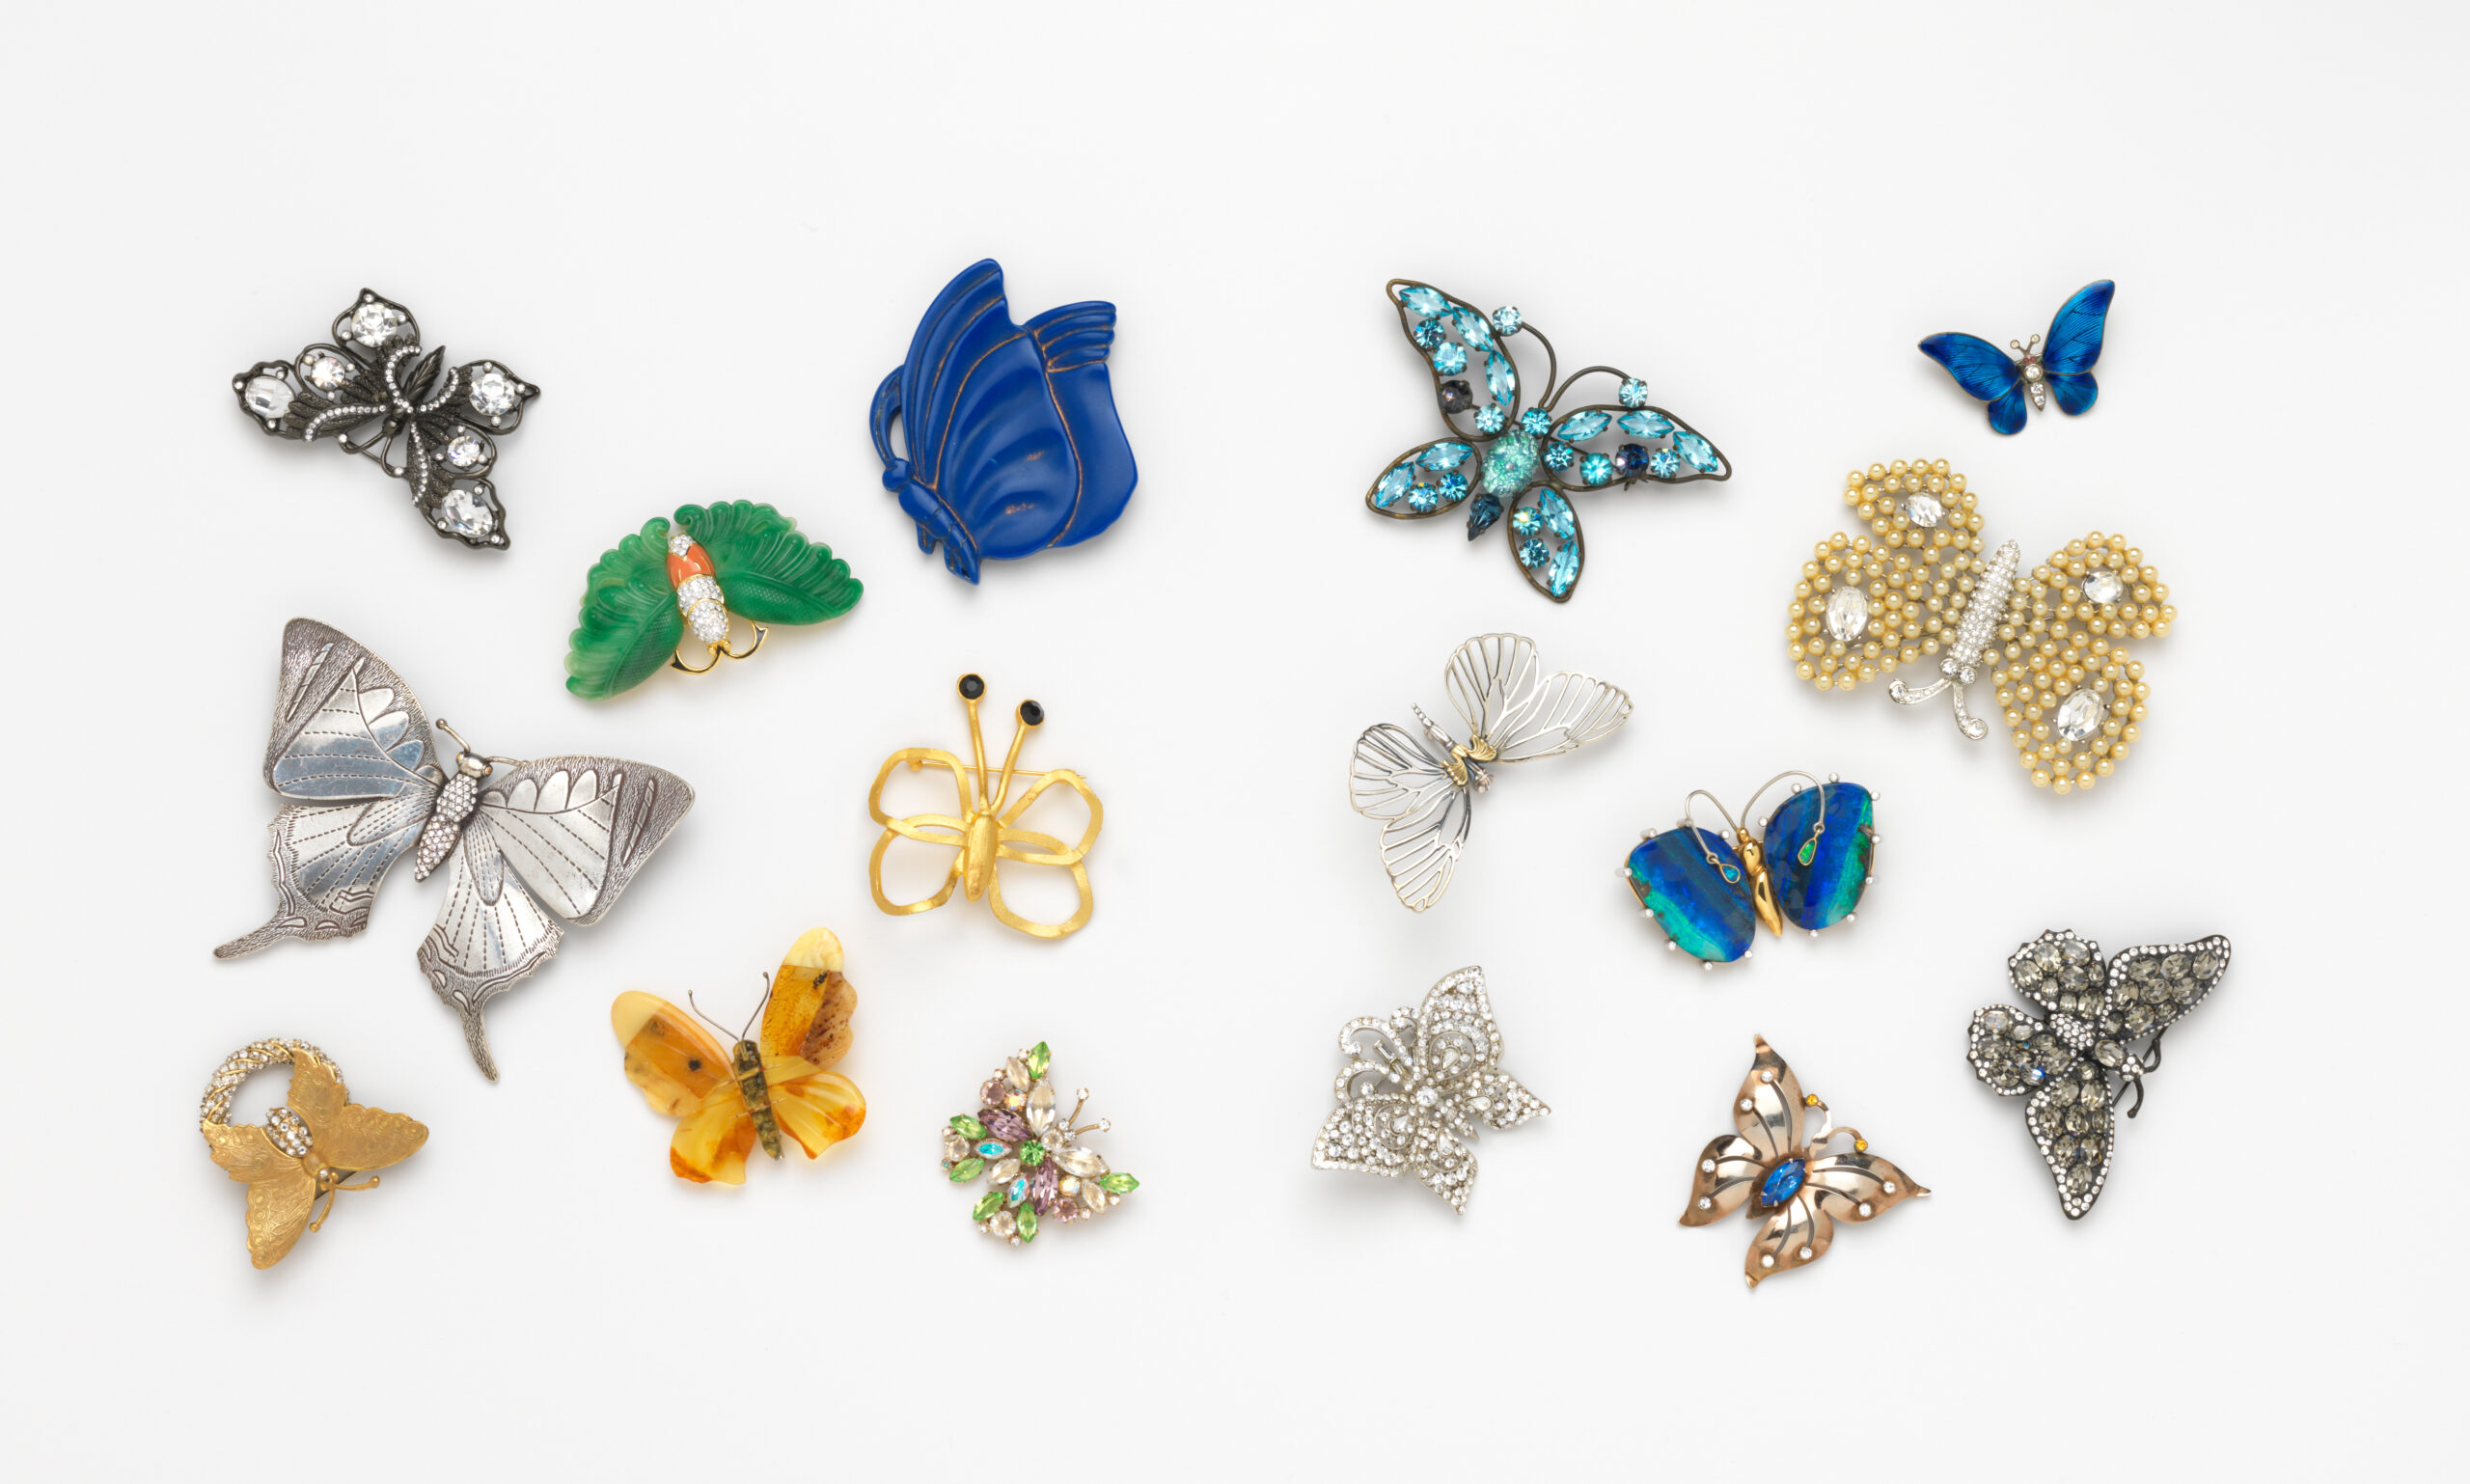 The butterfly pins – Cuteanimalpins